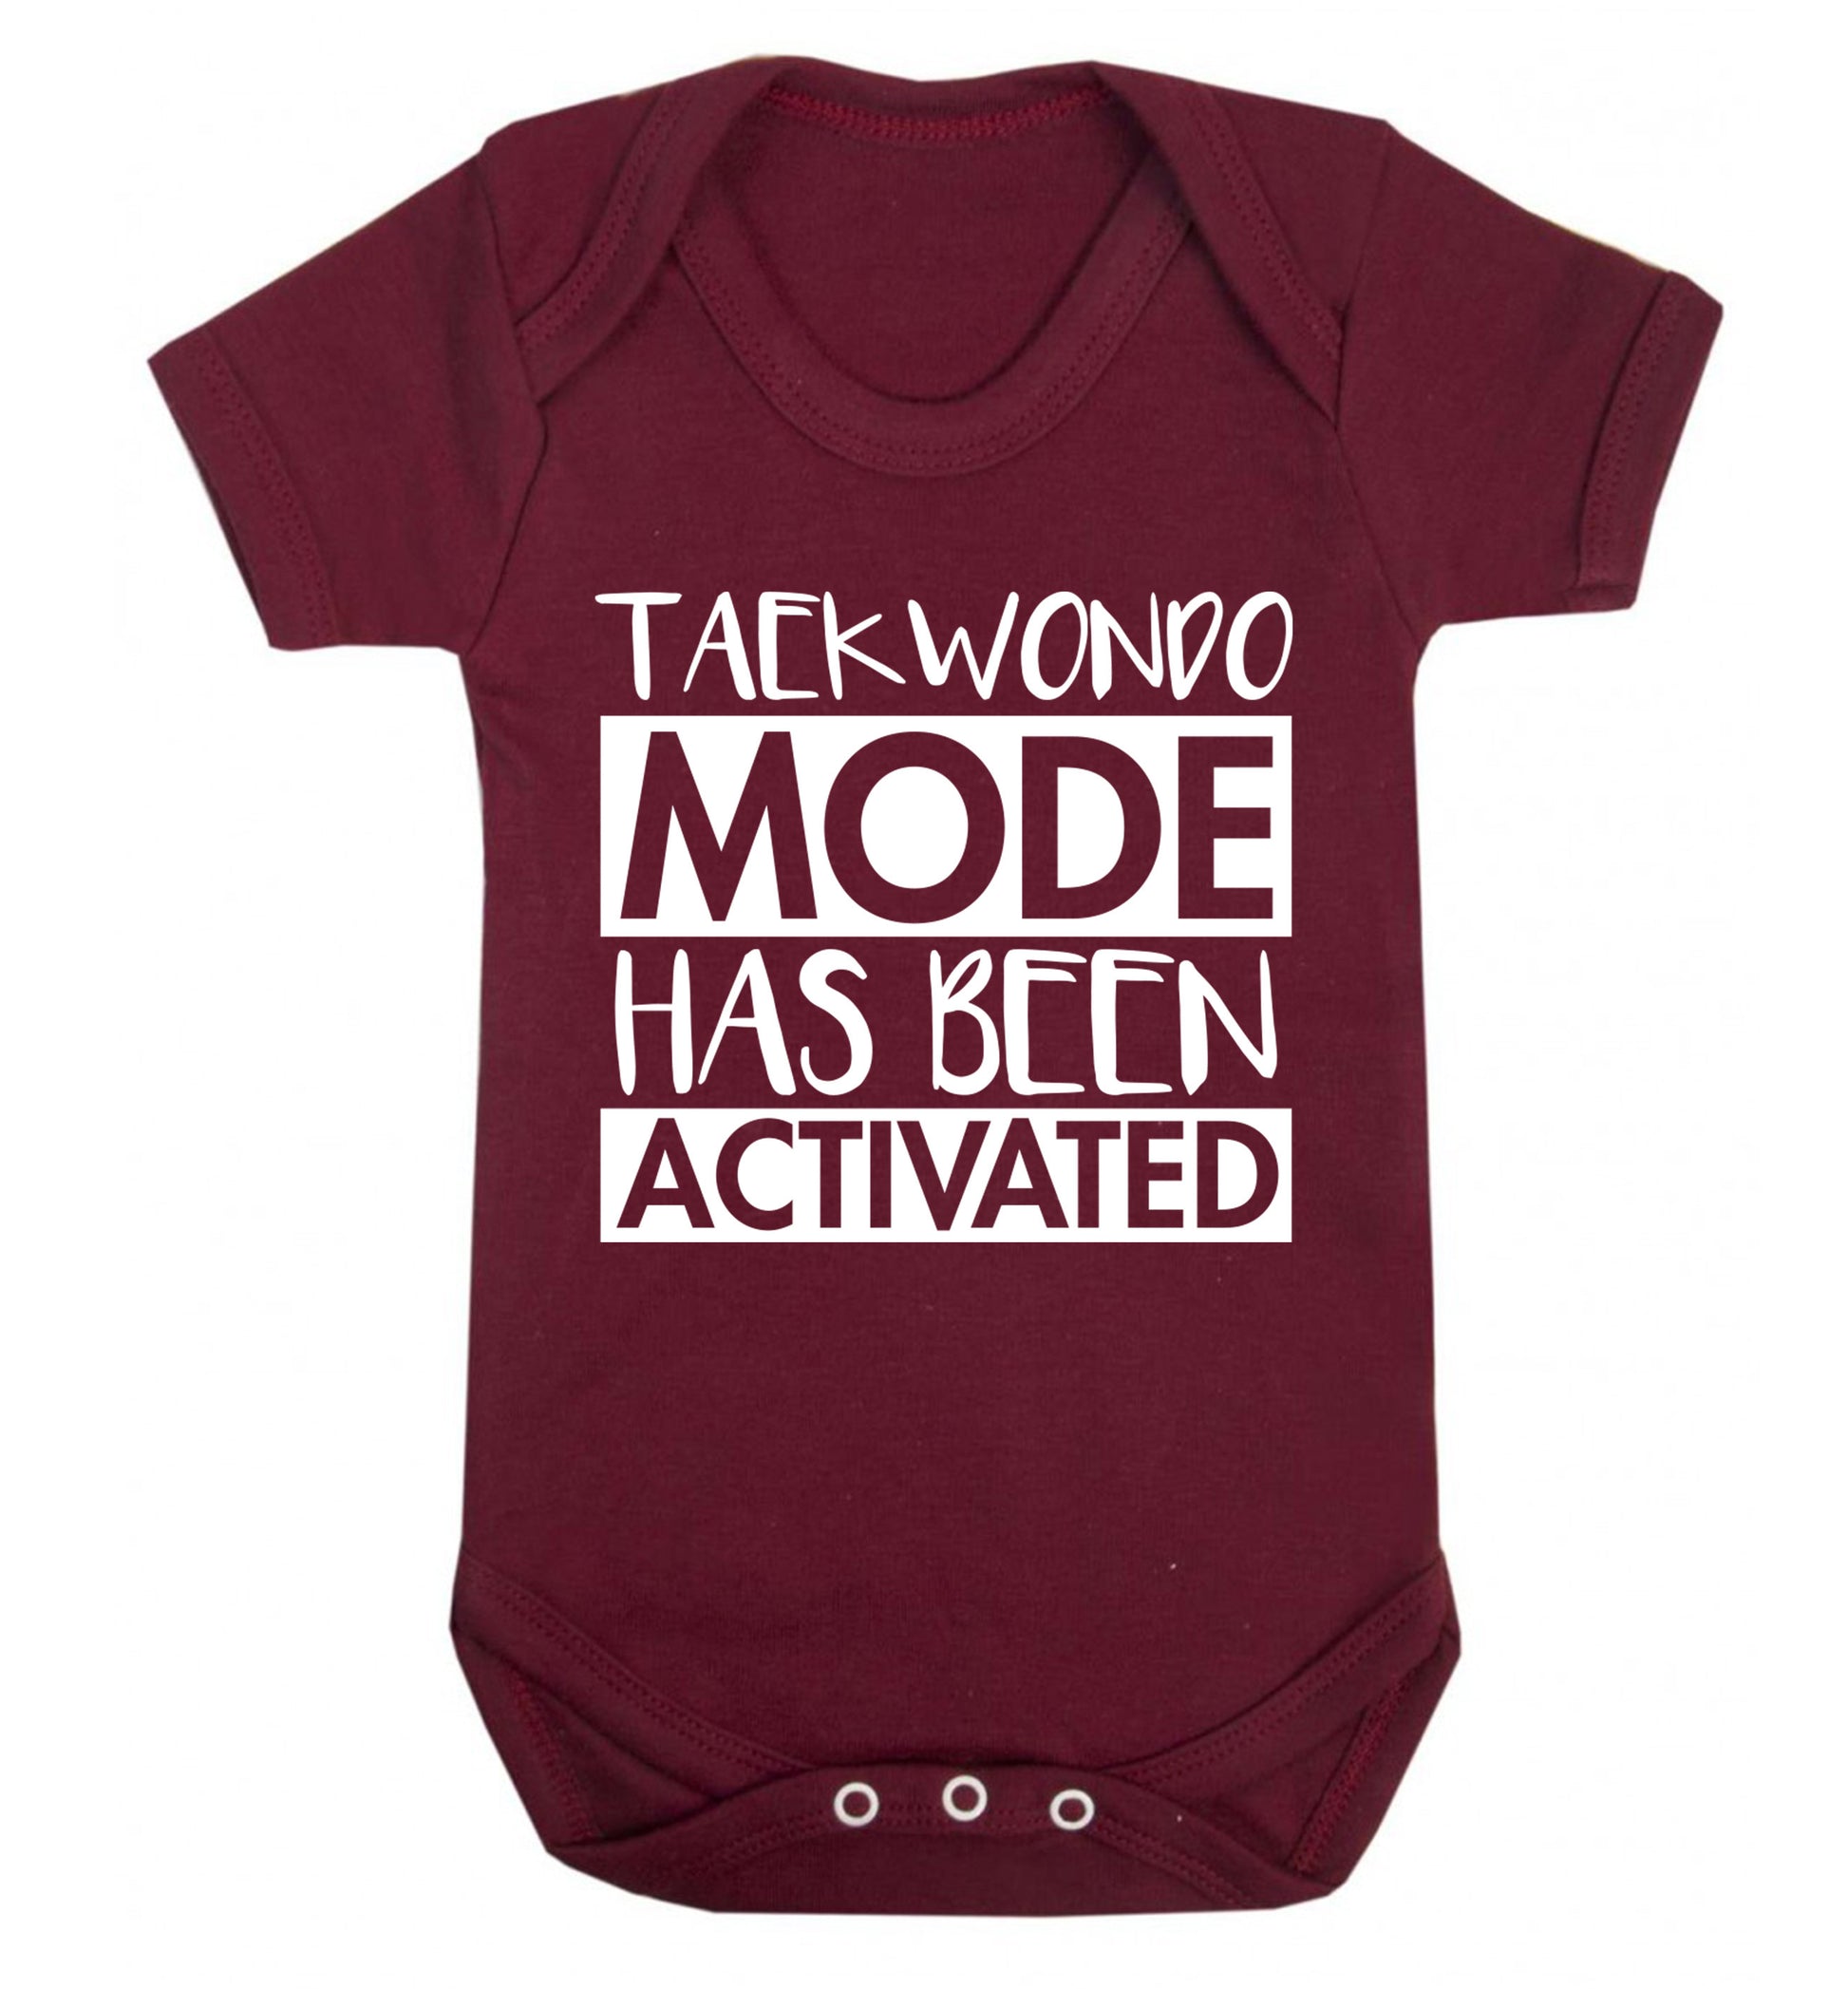 Taekwondo mode activated Baby Vest maroon 18-24 months